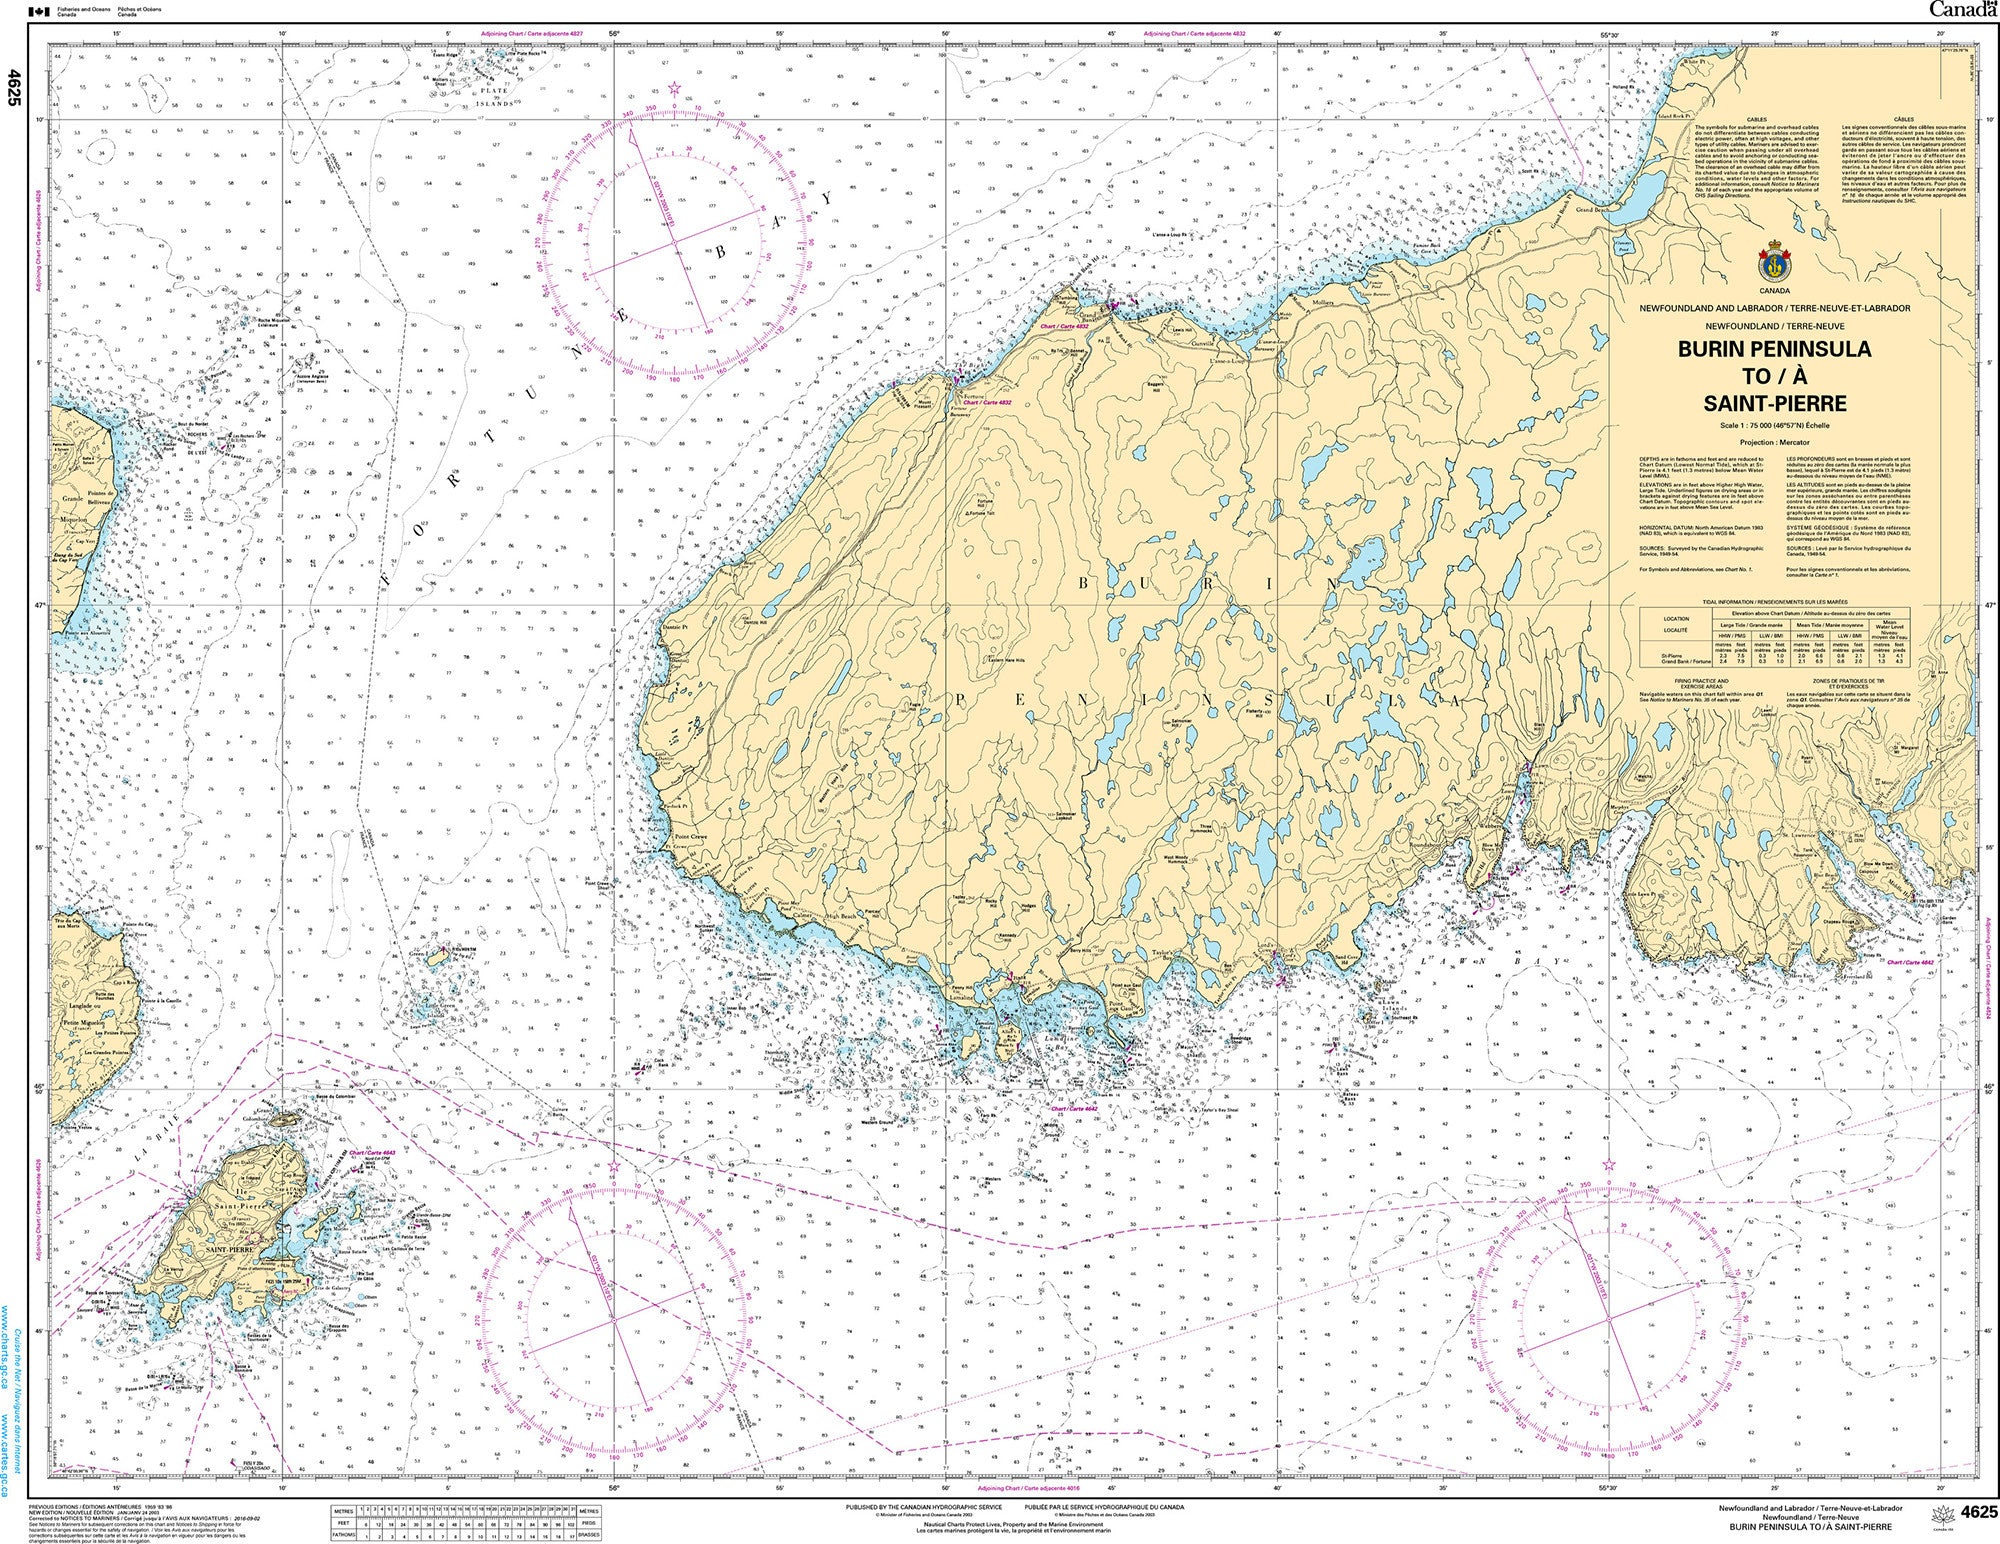 Canadian Hydrographic Service Nautical Chart CHS4625: Burin Peninsula to/à Saint-Pierre